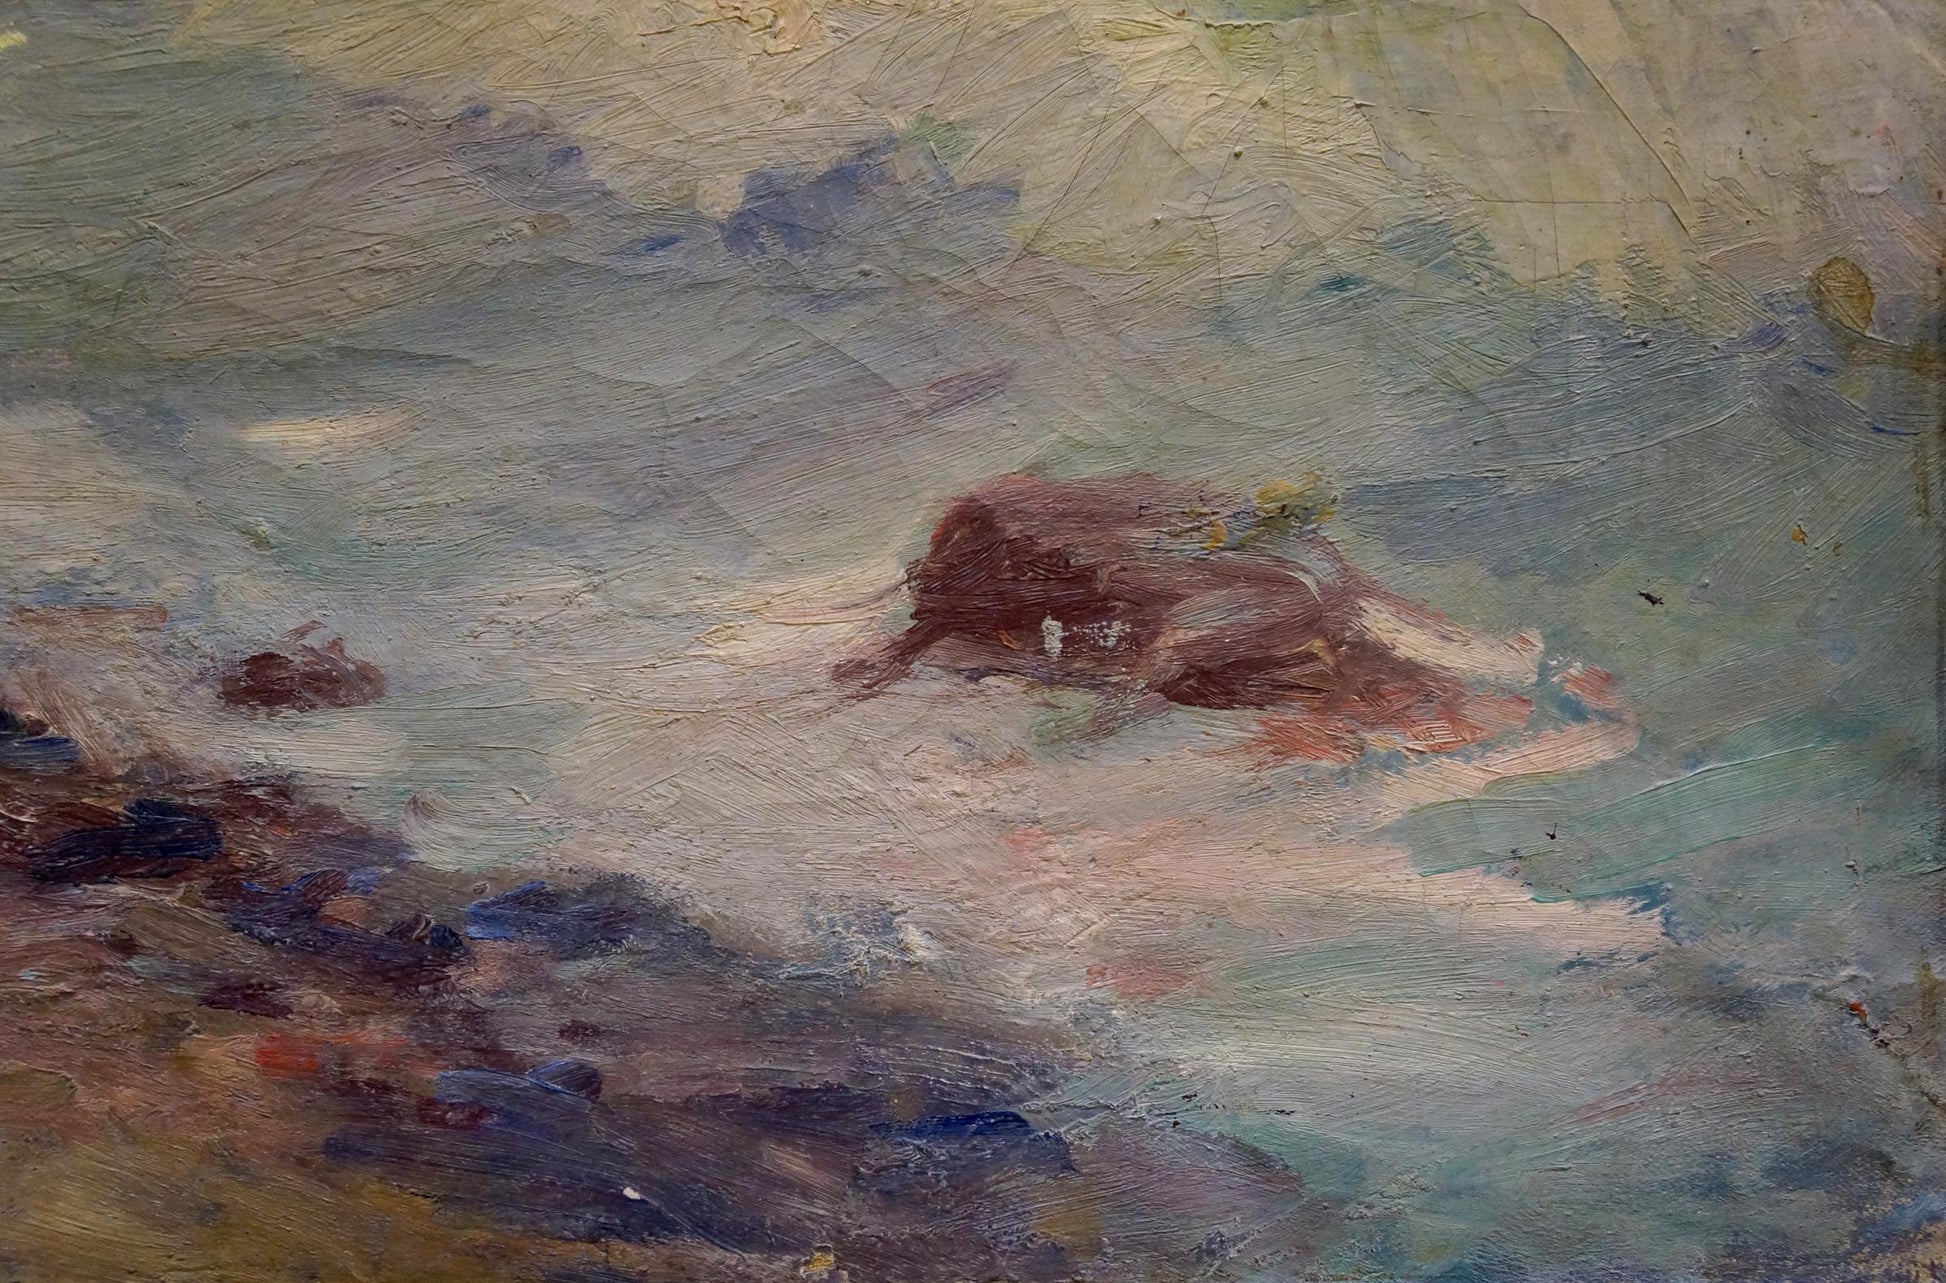 Boris Shaulov presents the oil painting Landscape